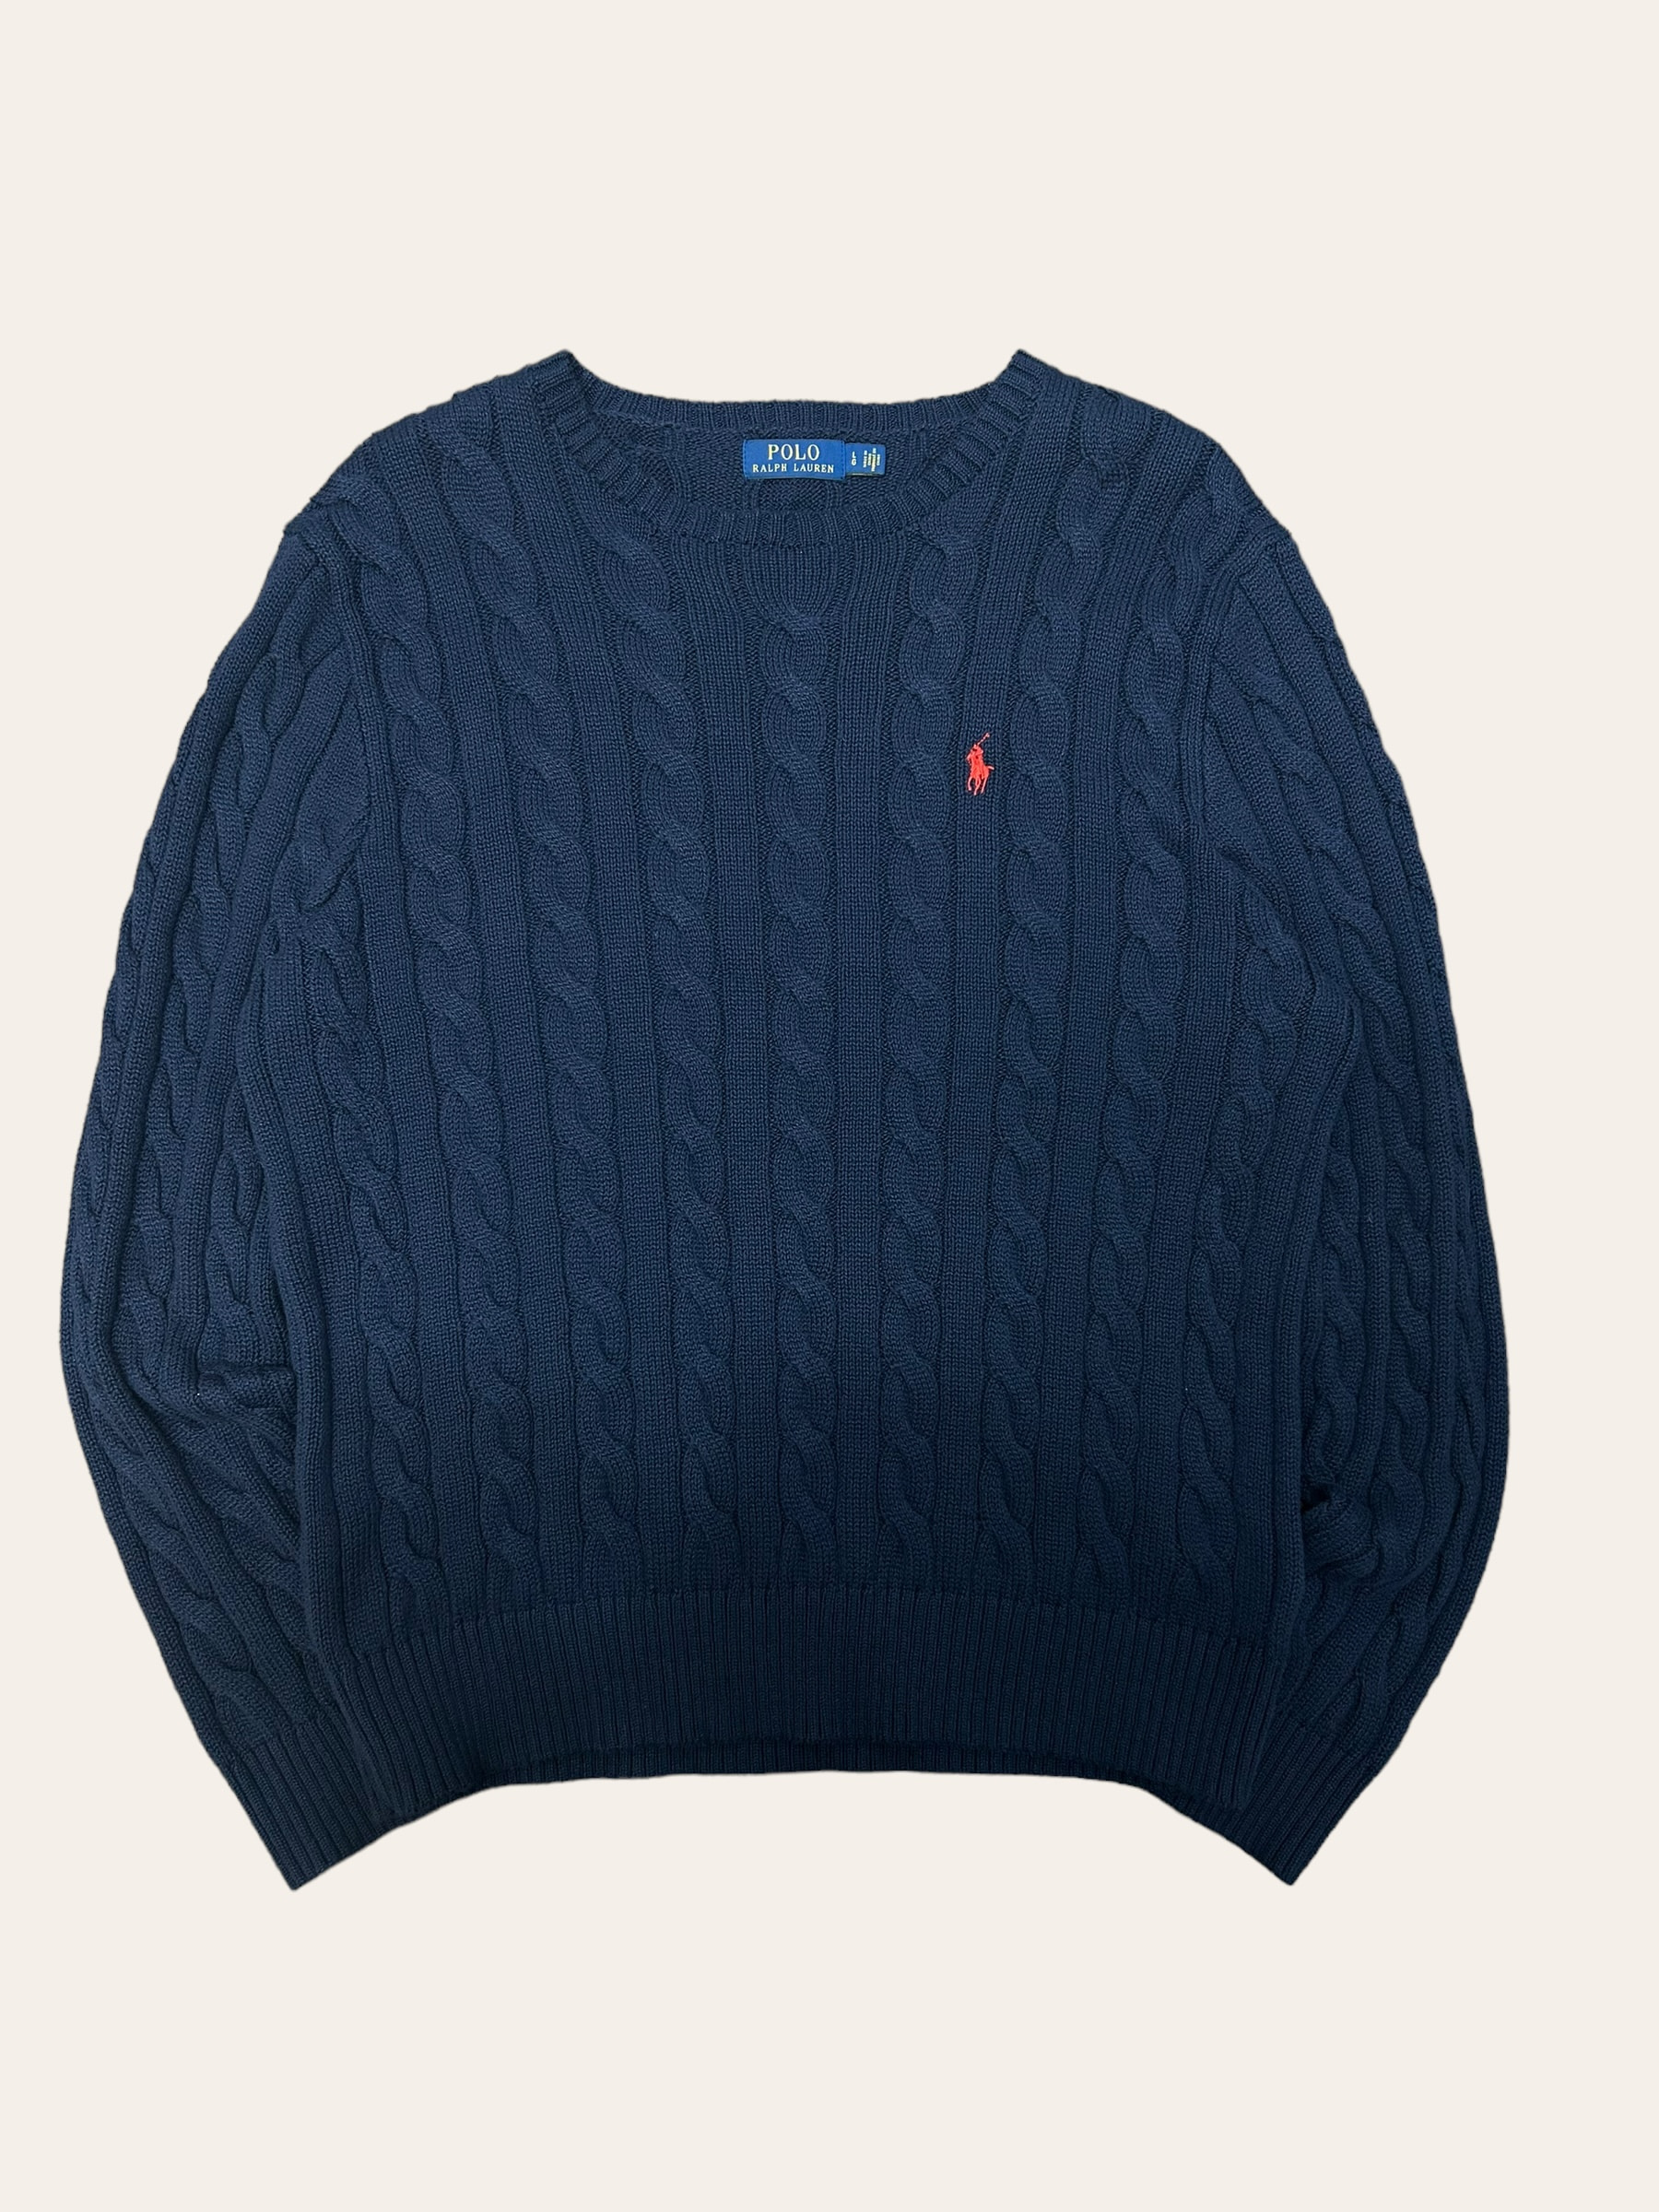 Polo ralph lauren navy cotton cable sweater L